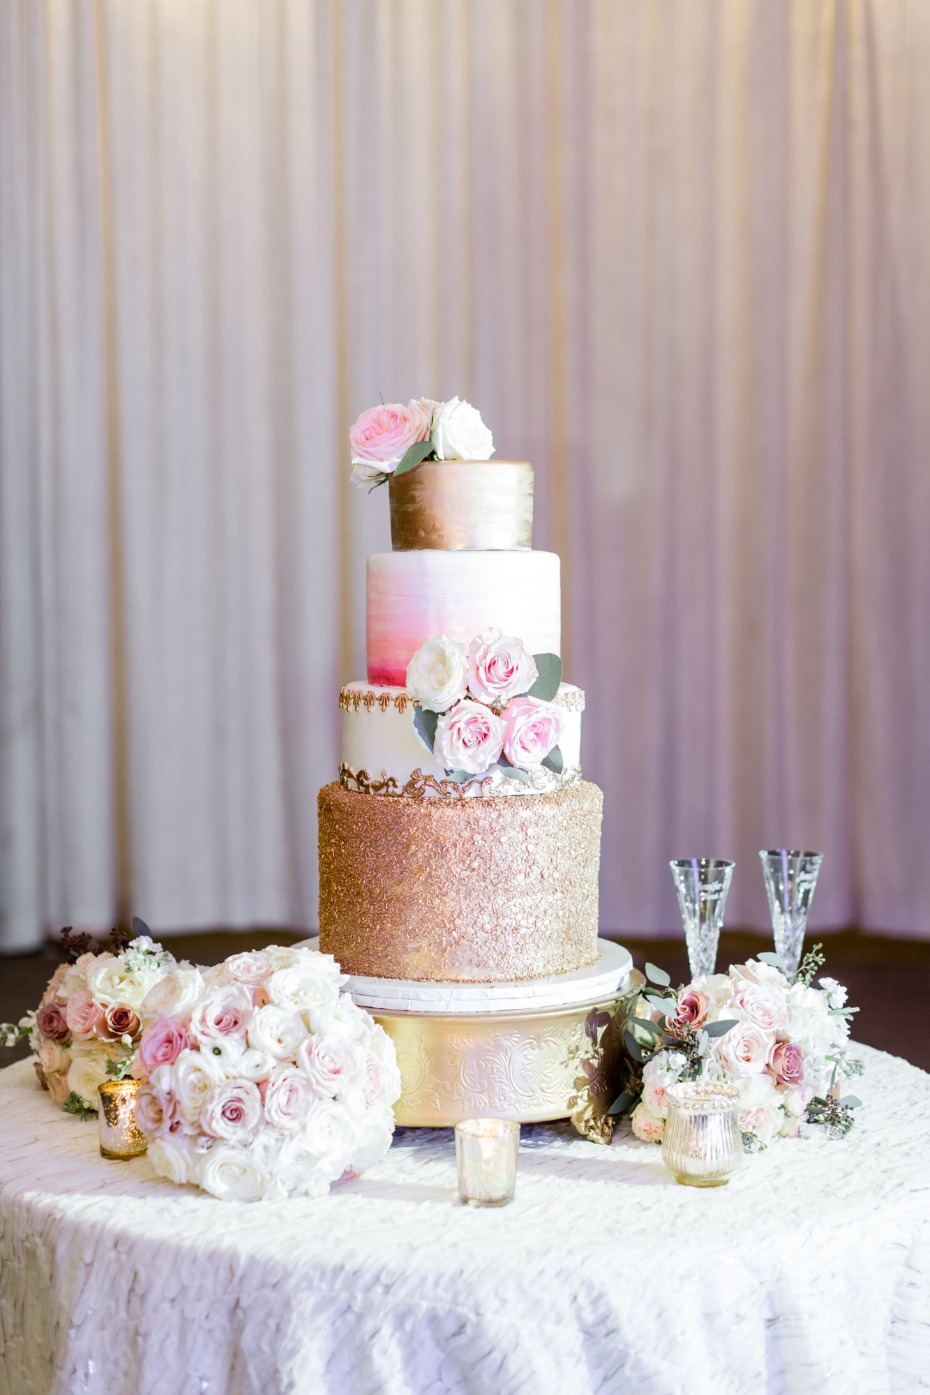 Blush, white and gold wedding cake